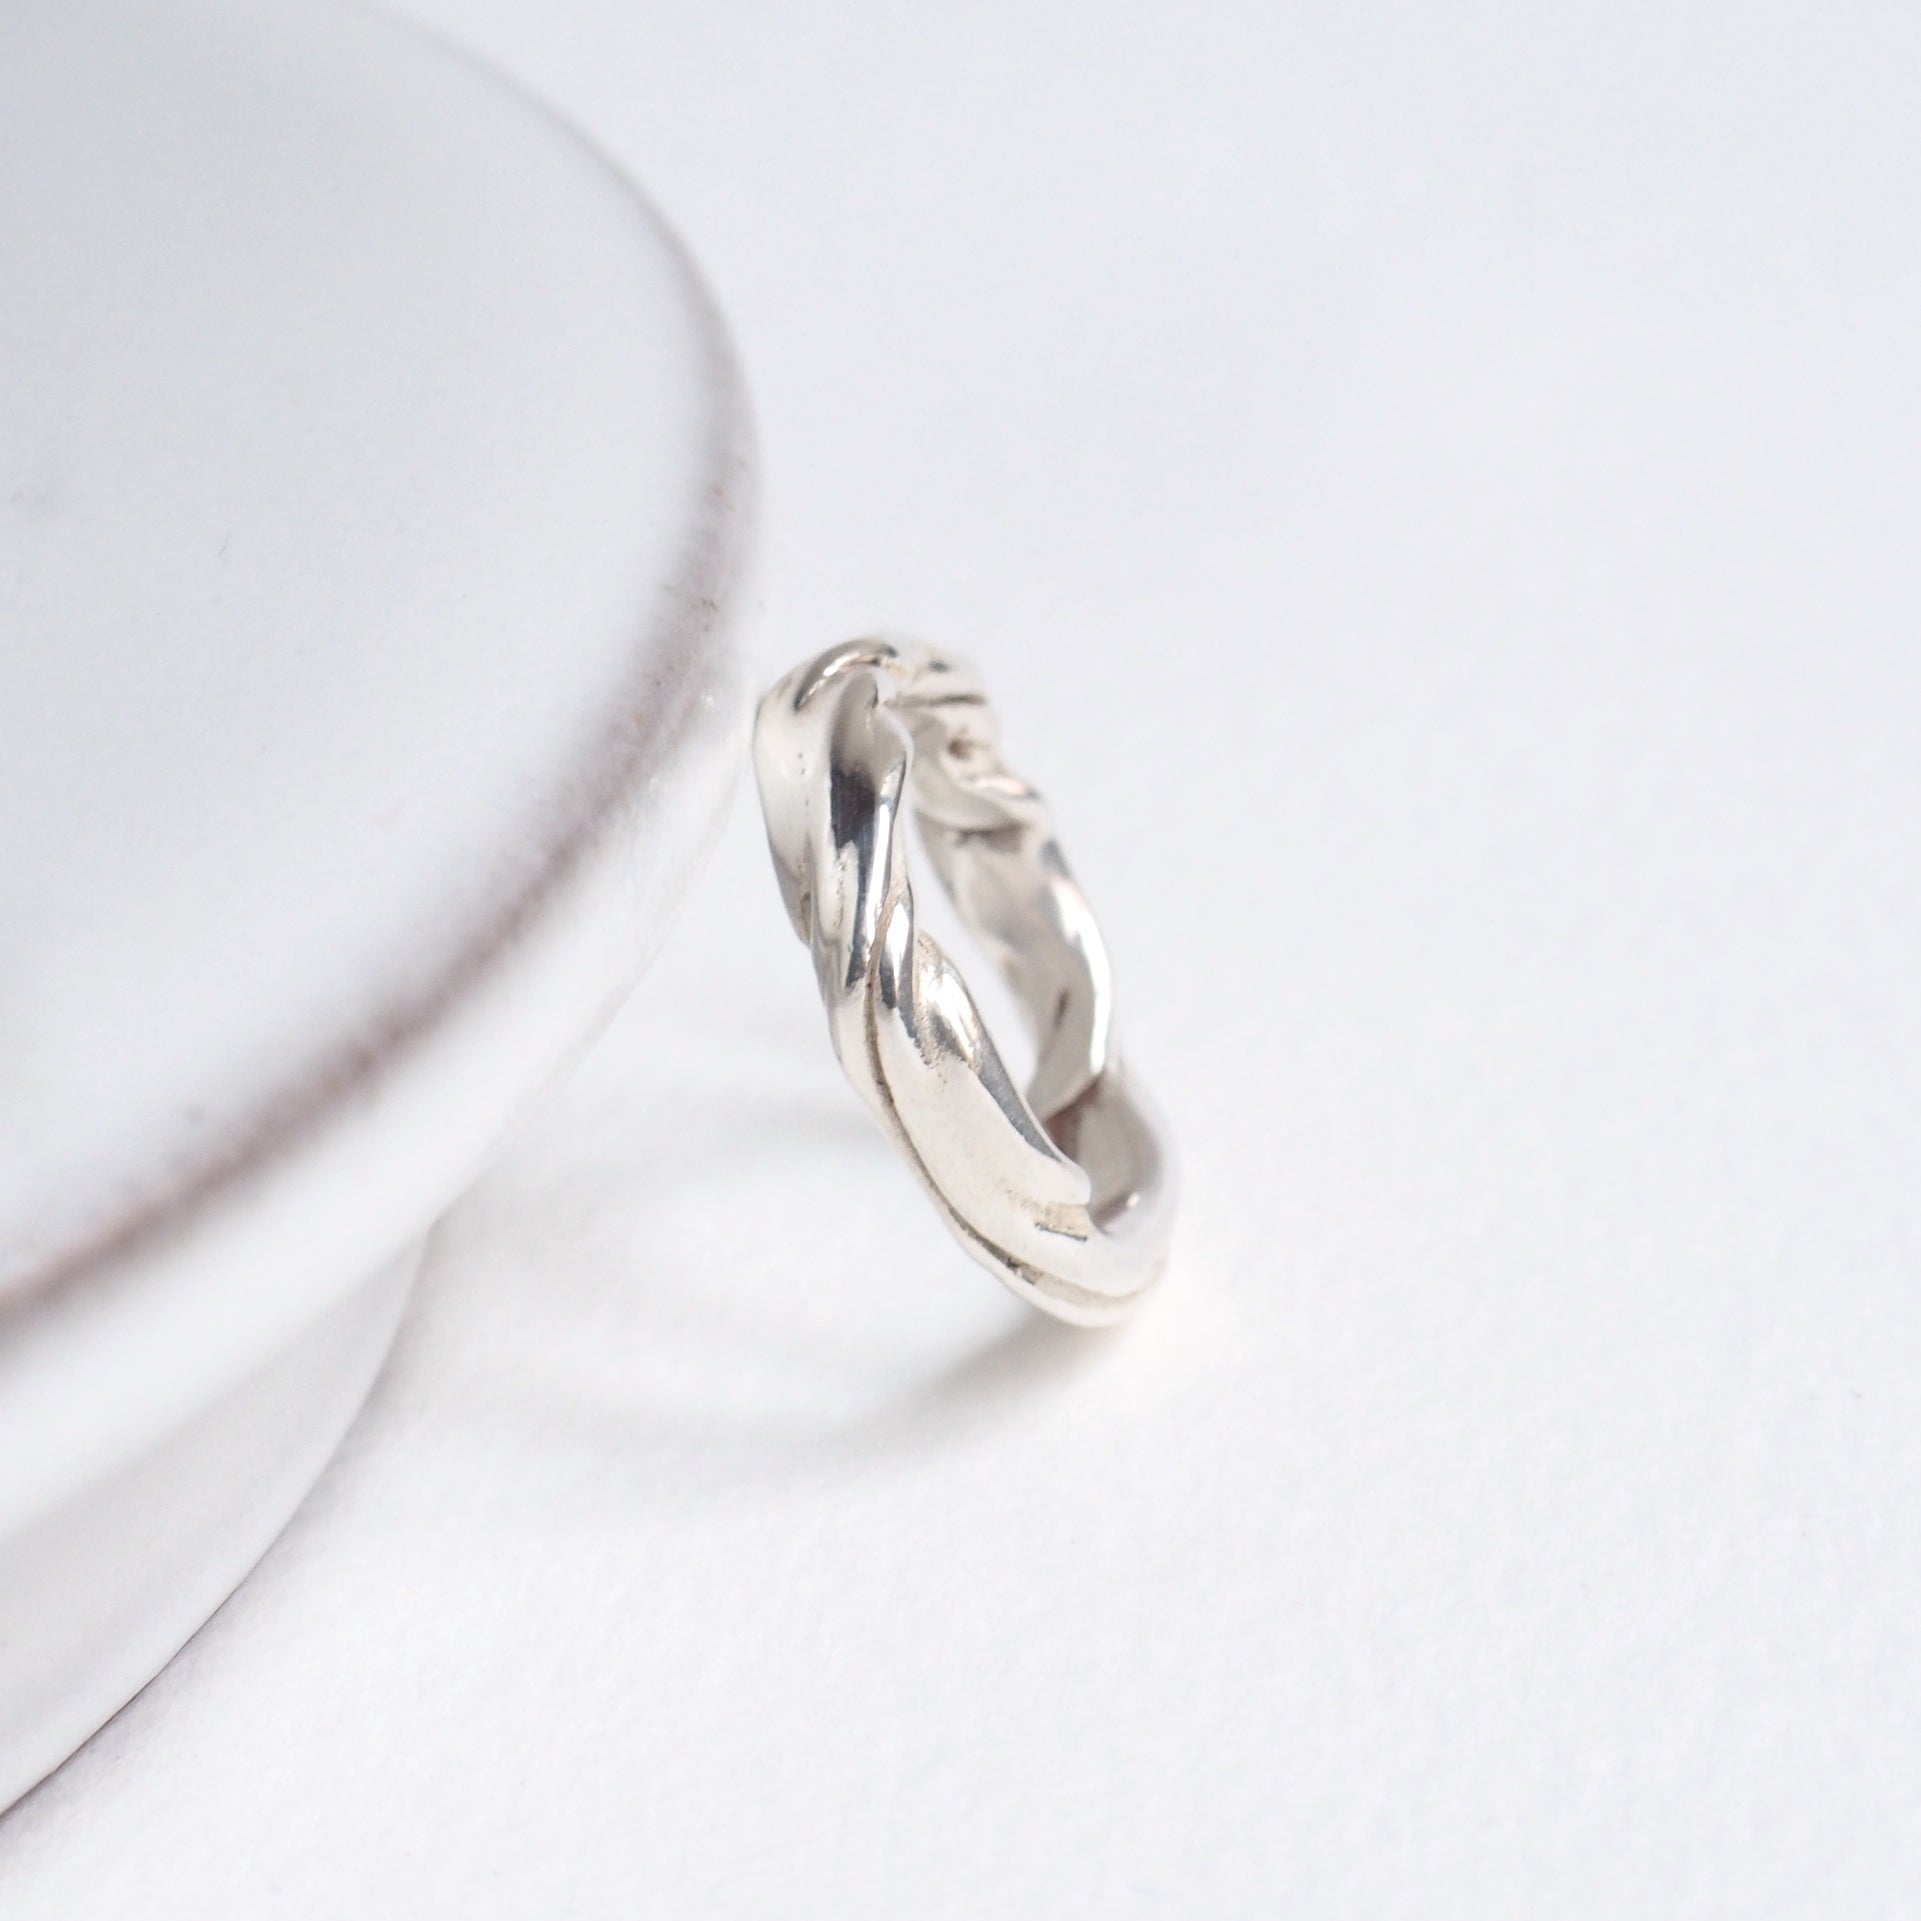 Ring Jewelry Silver Organic Handcrafted Handmade Fashion bespoke unique custom design 